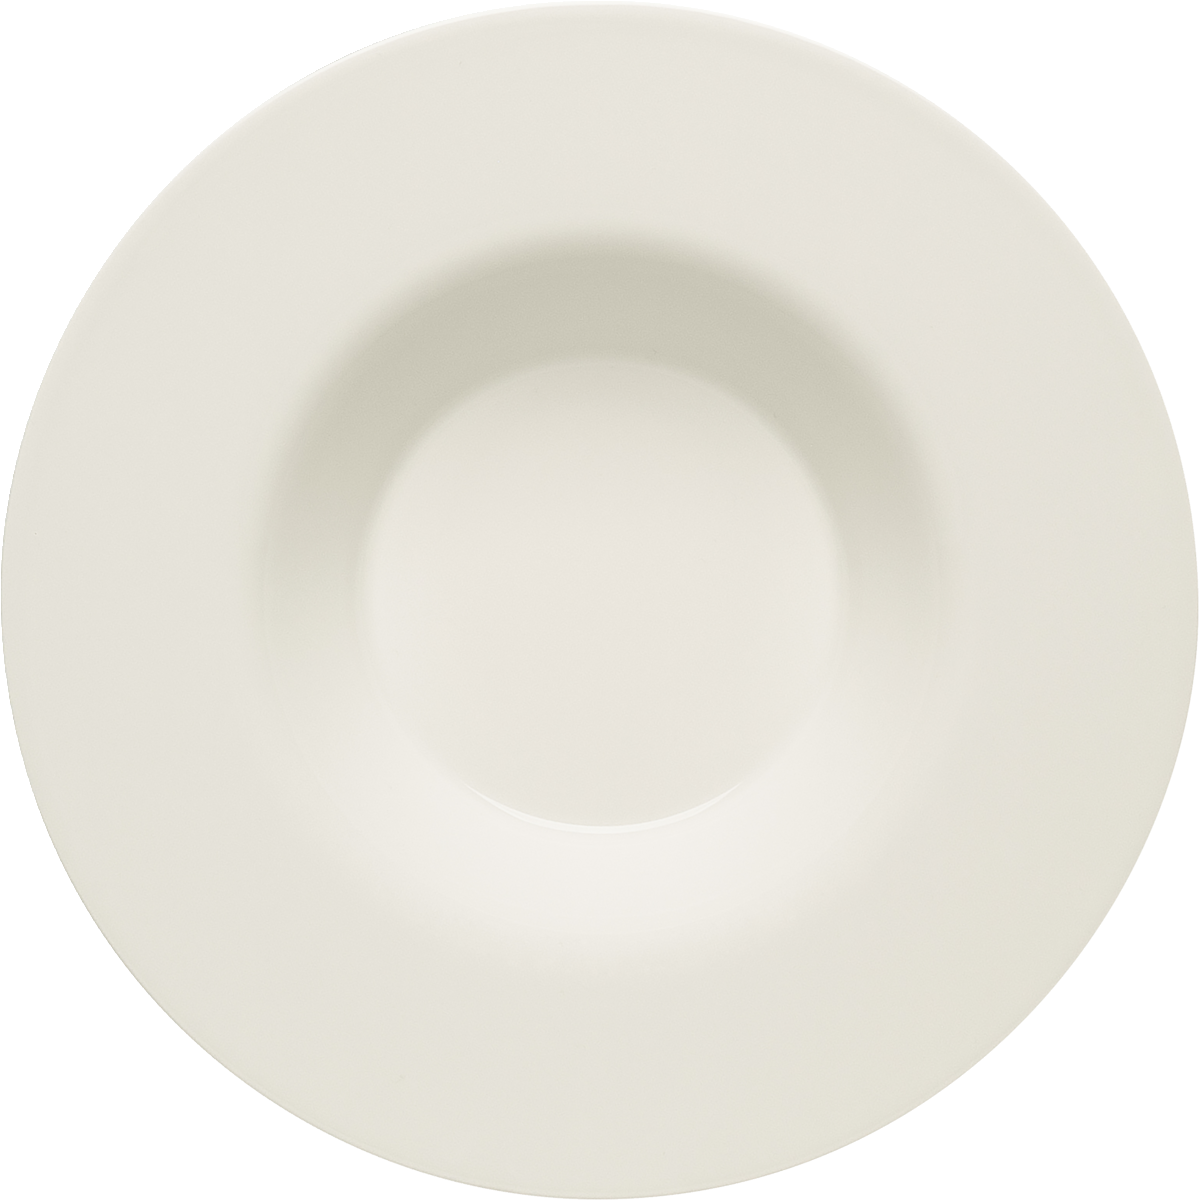 Plate deep round with rim 29cm